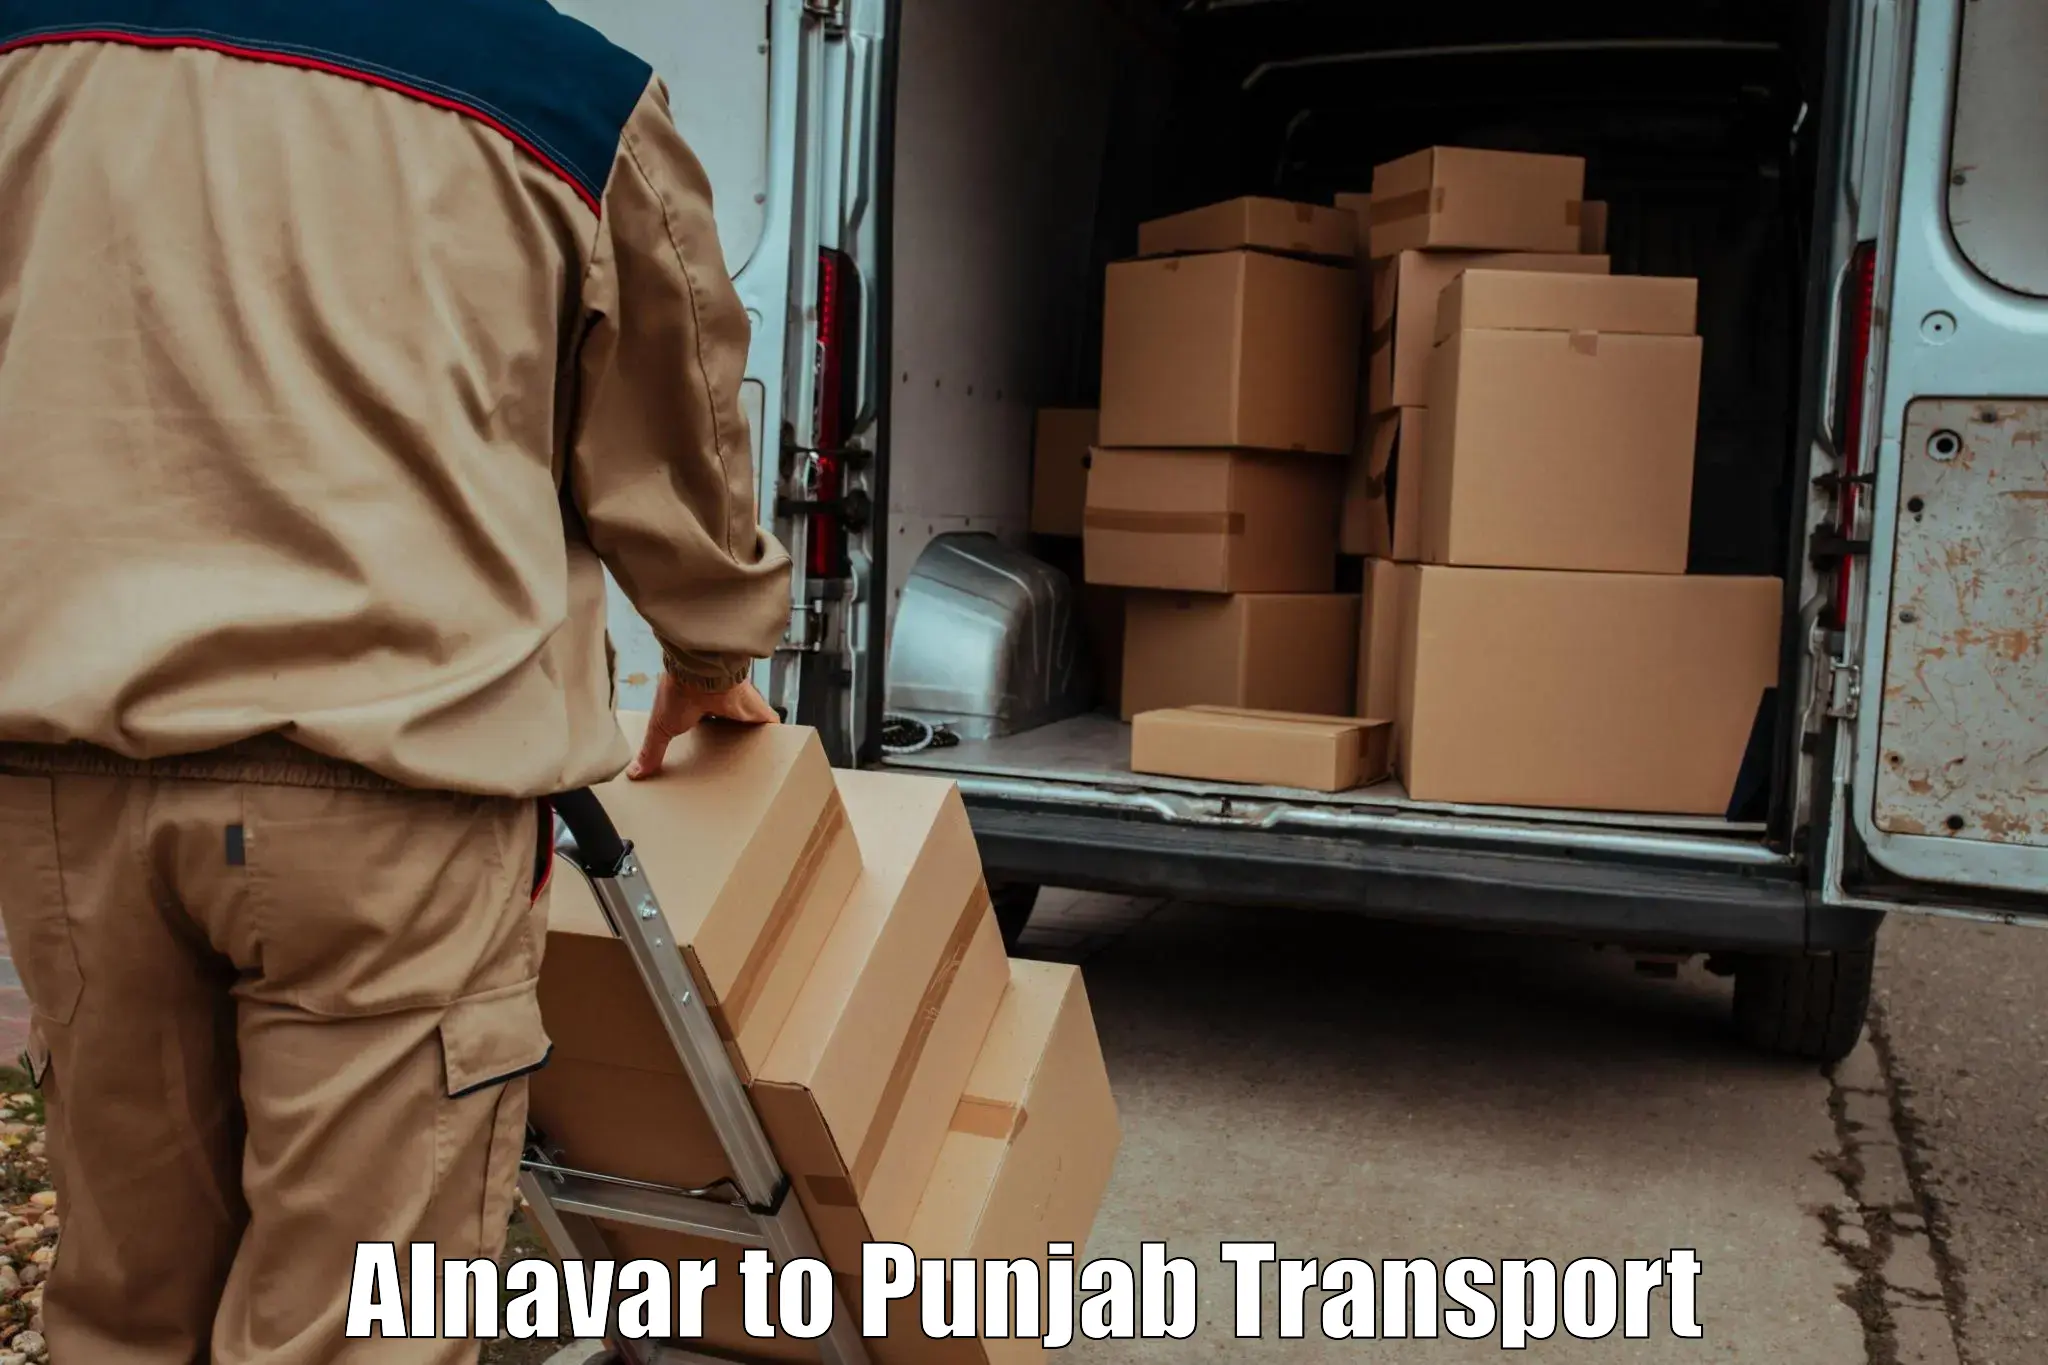 Transportation services Alnavar to Sultanpur Lodhi